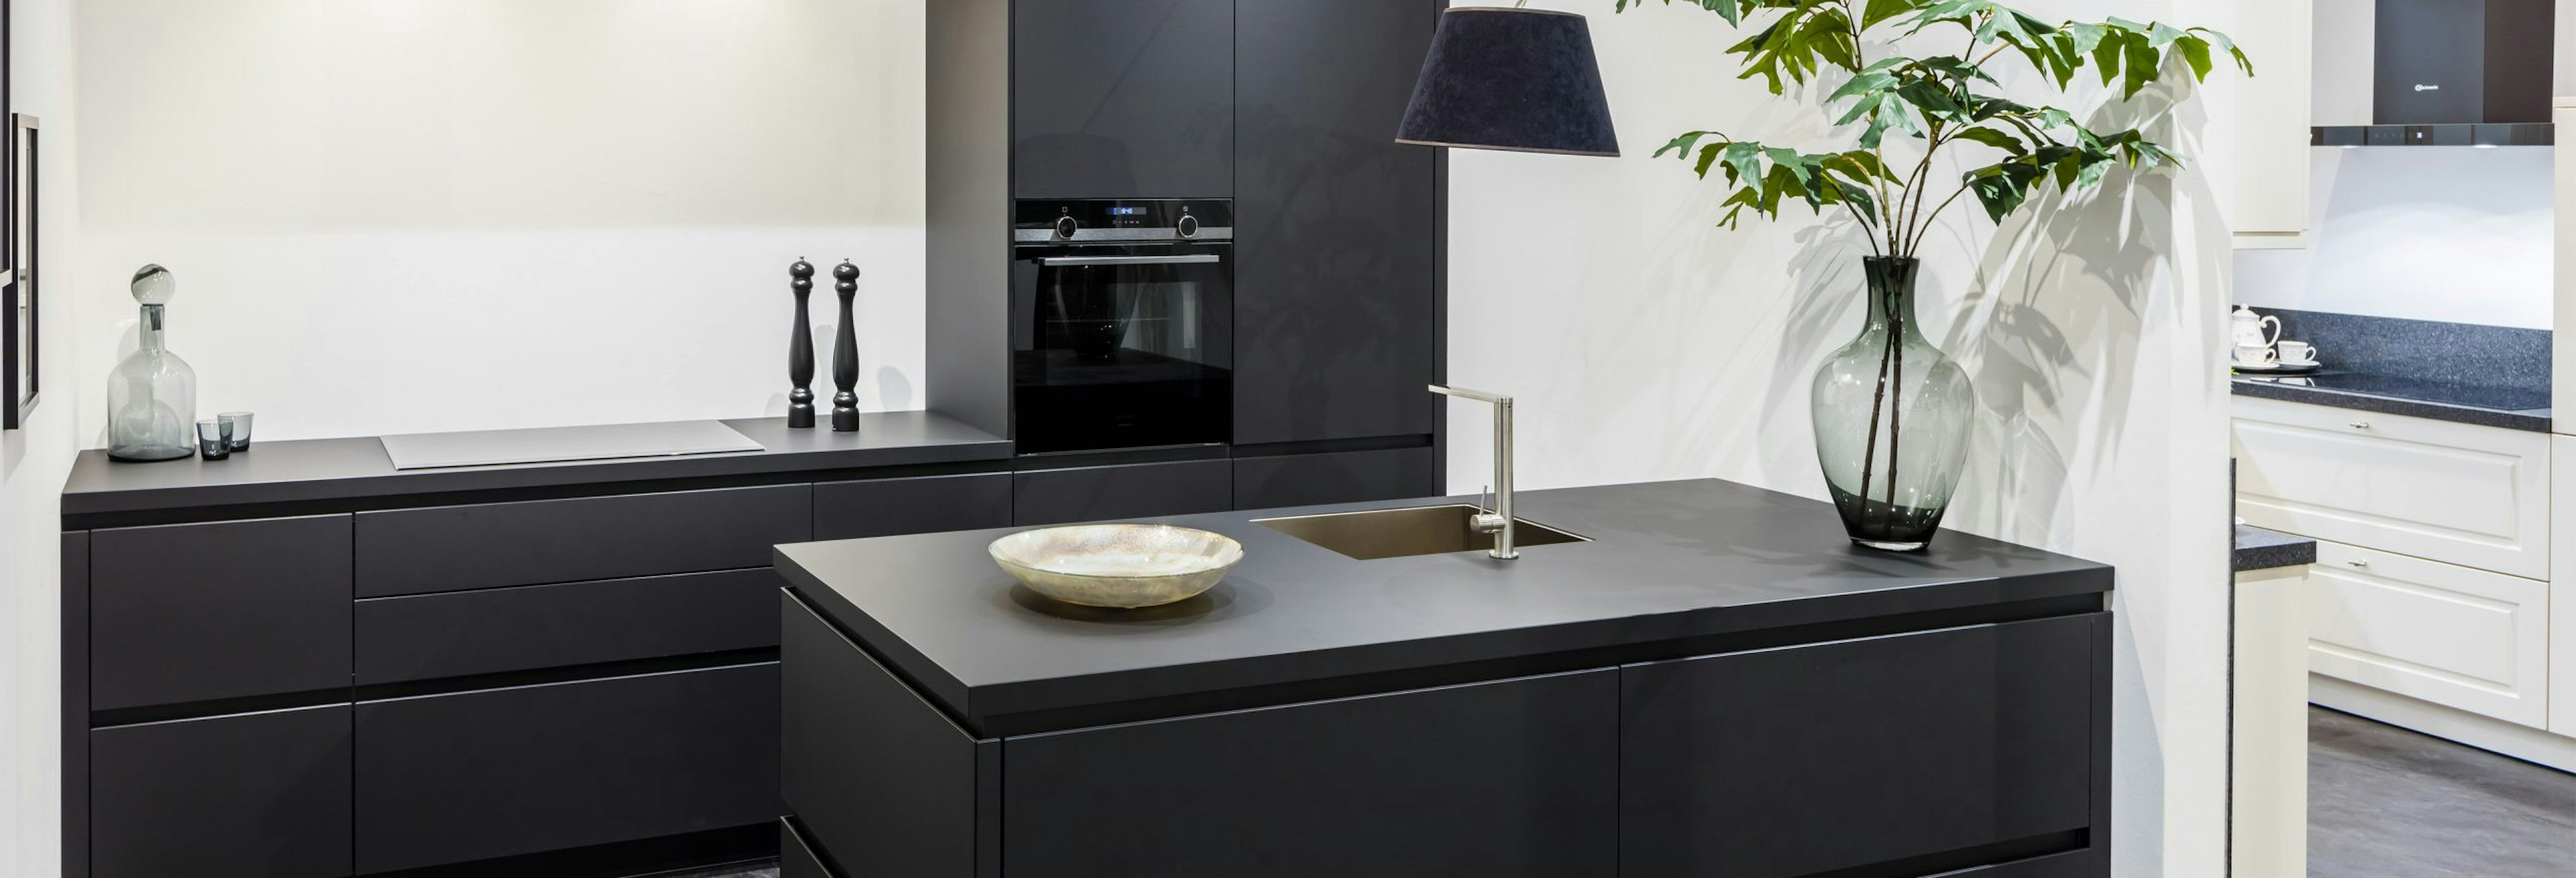 Keuken 1400232 - Mat zwarte eilandkeuken met hoge keukenkasten